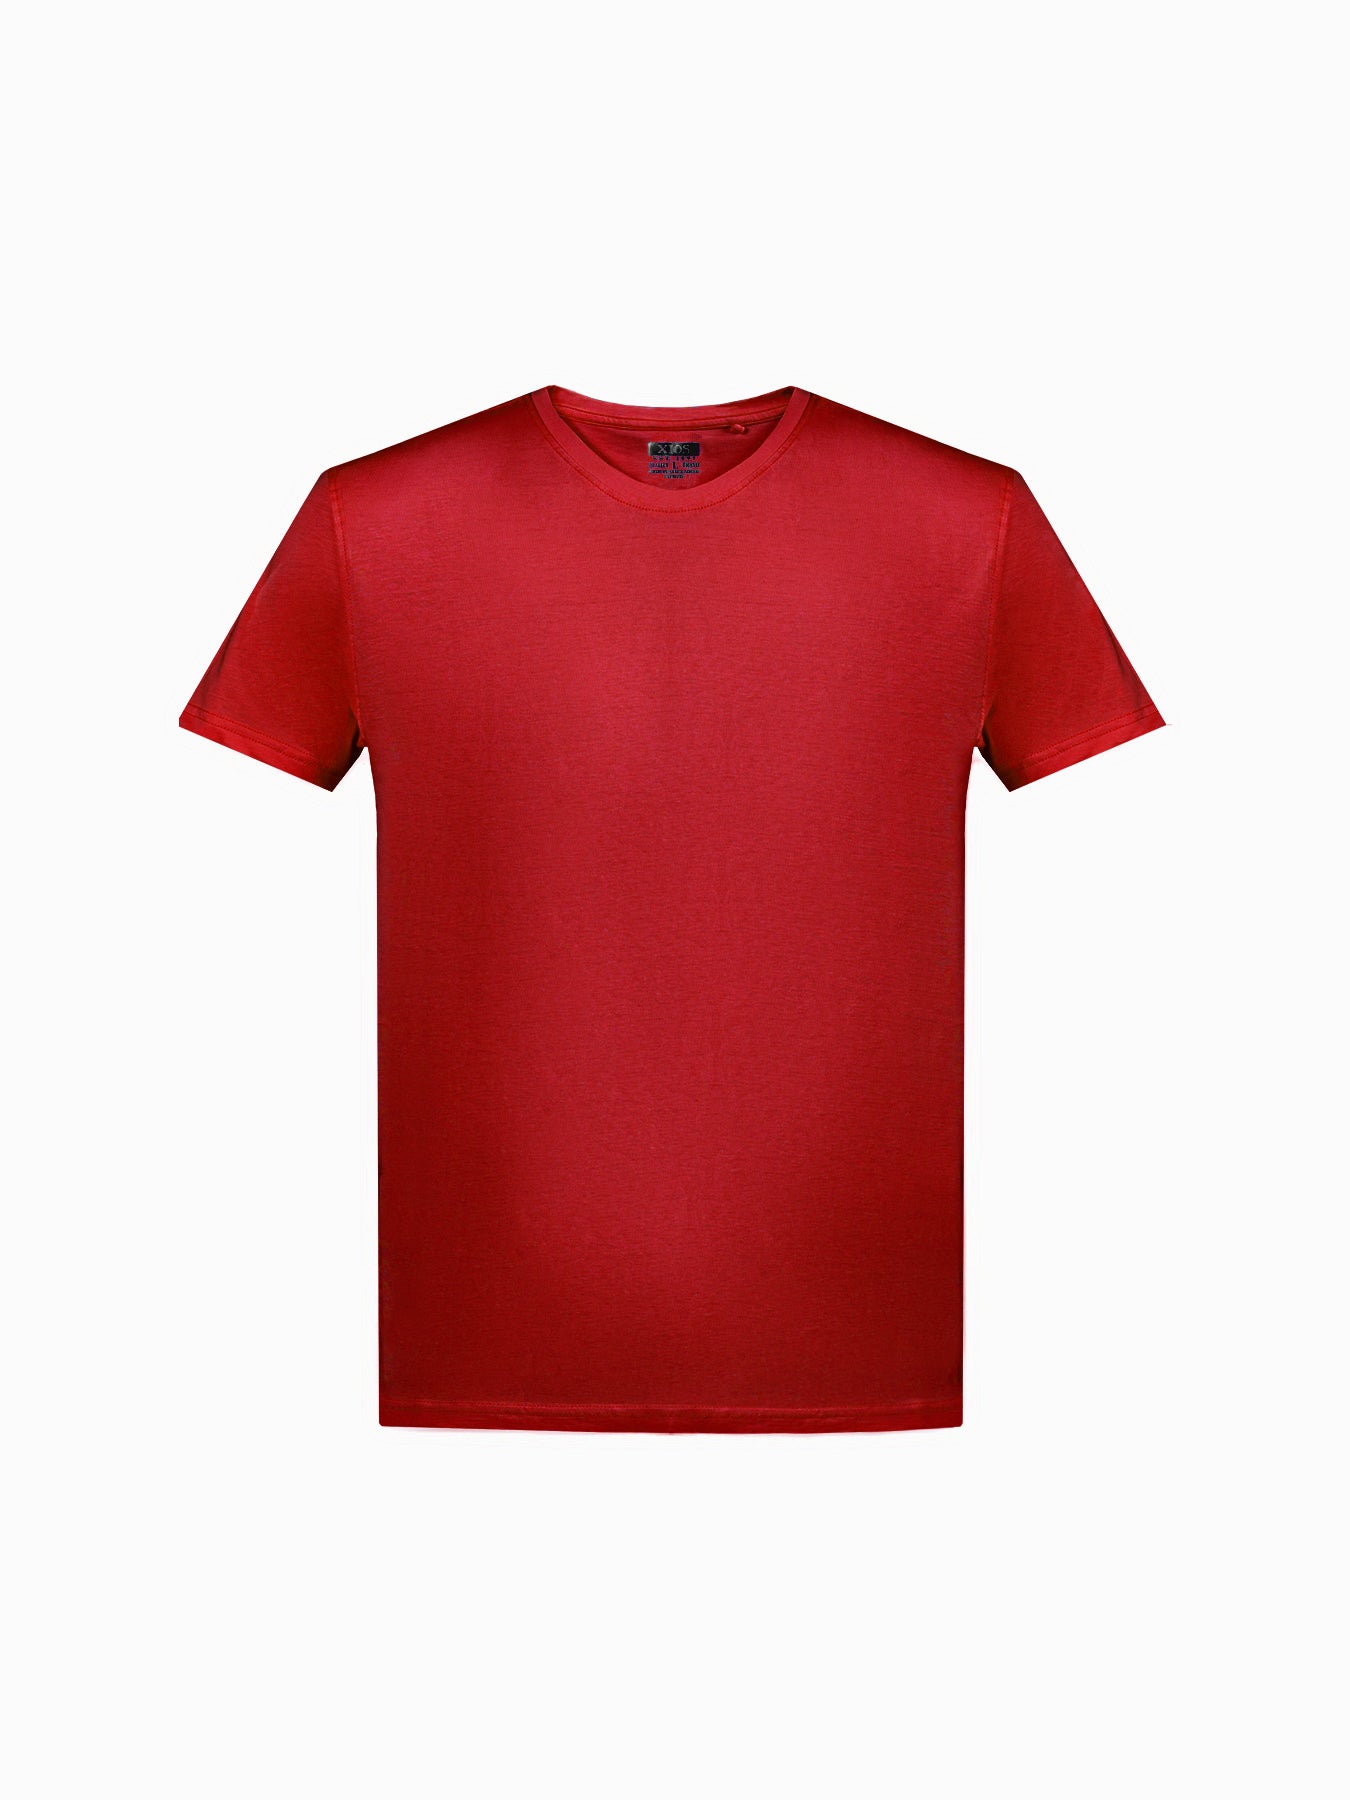 Camiseta básica con cuello redondo